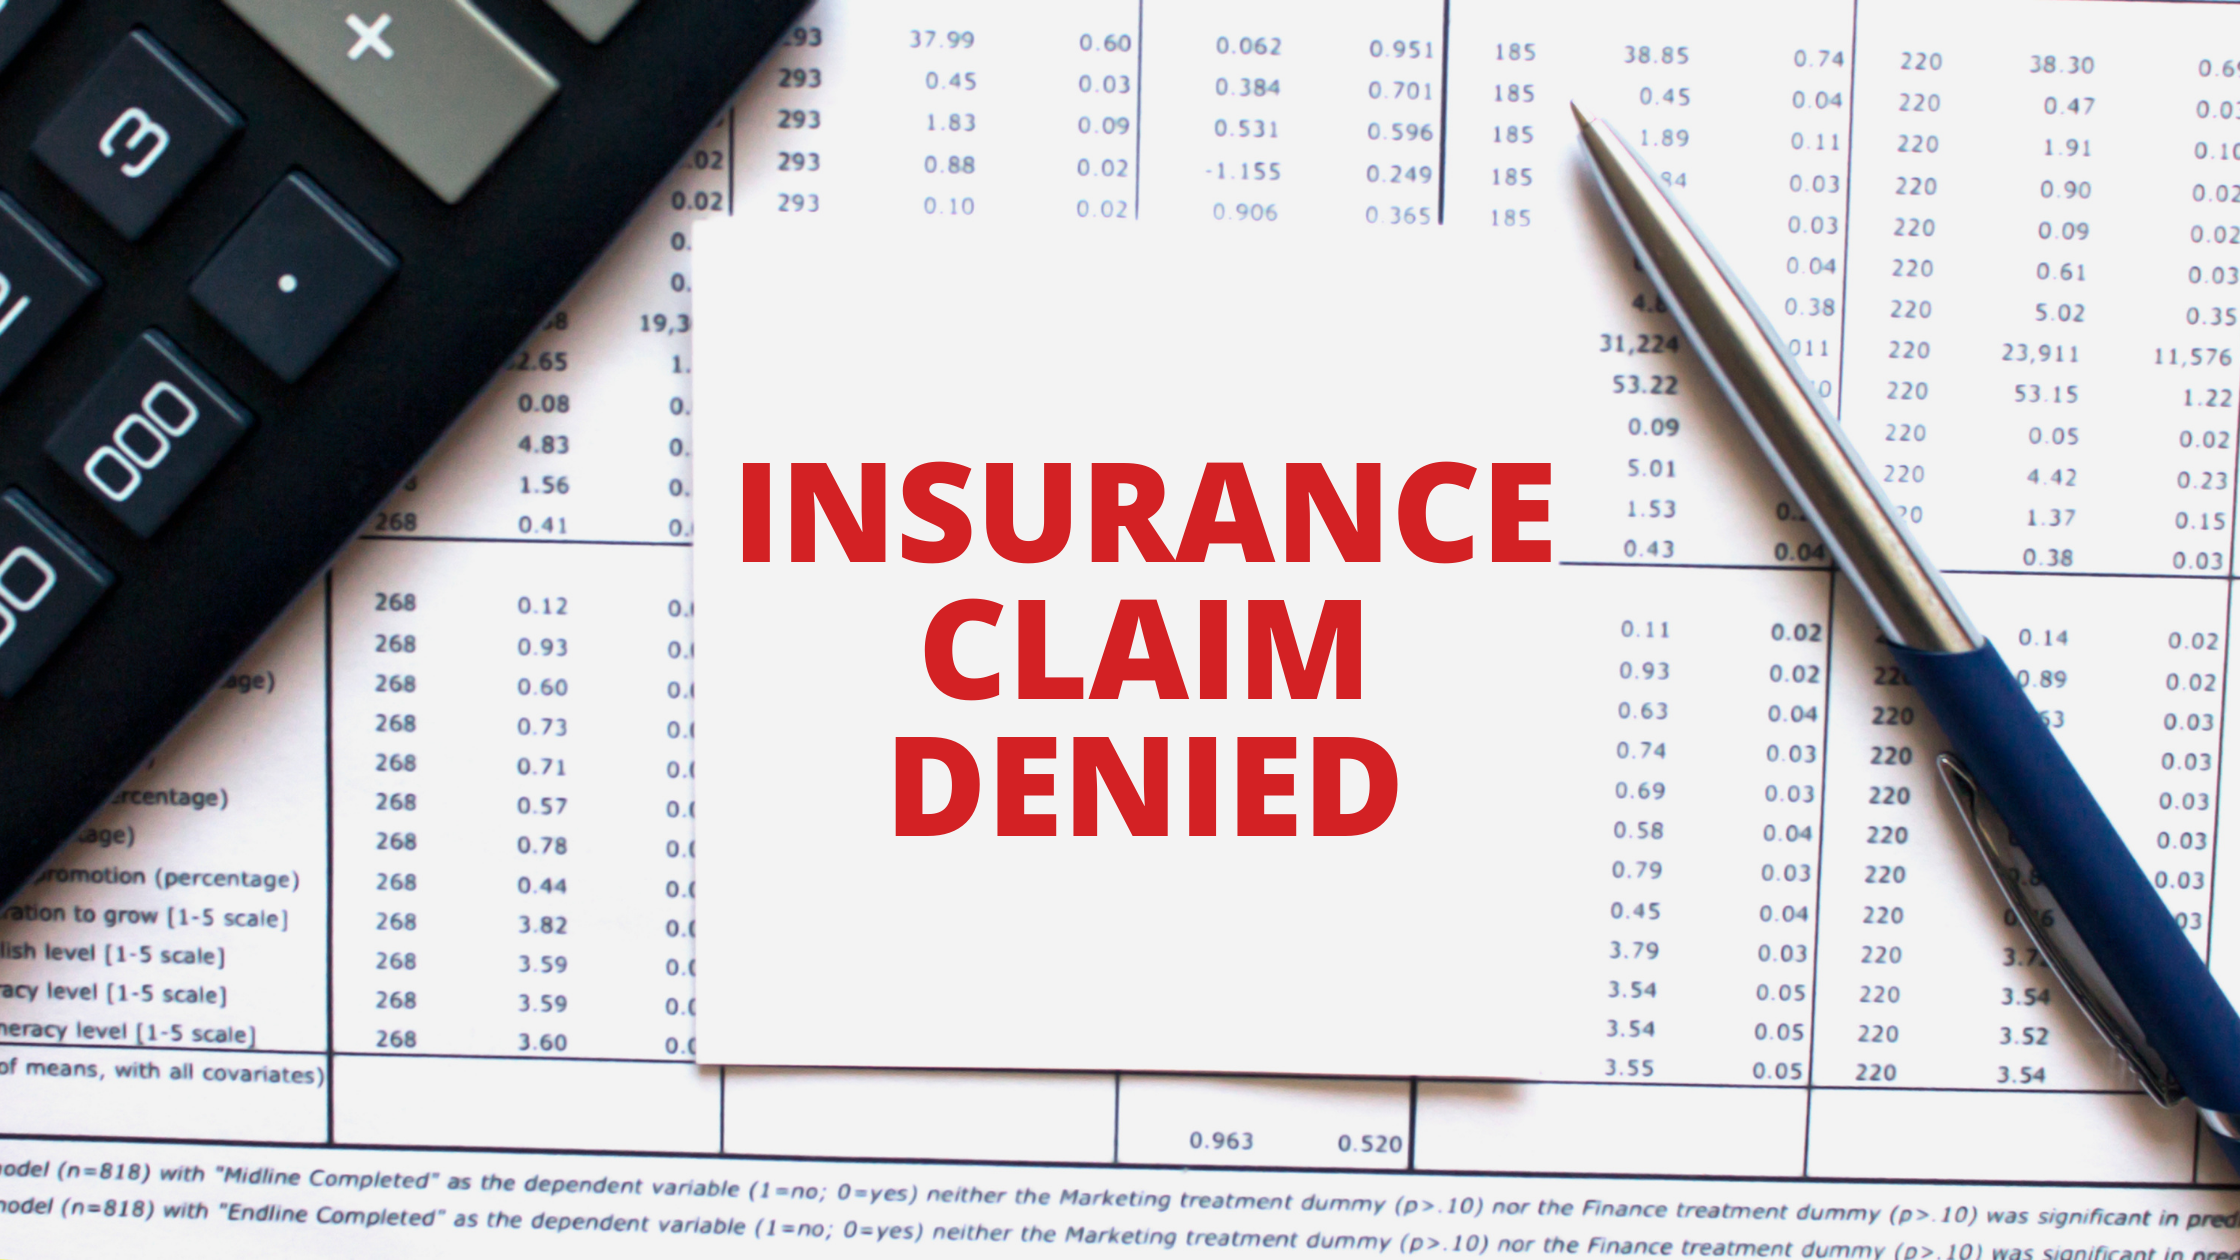 Car accident insurance claim denied